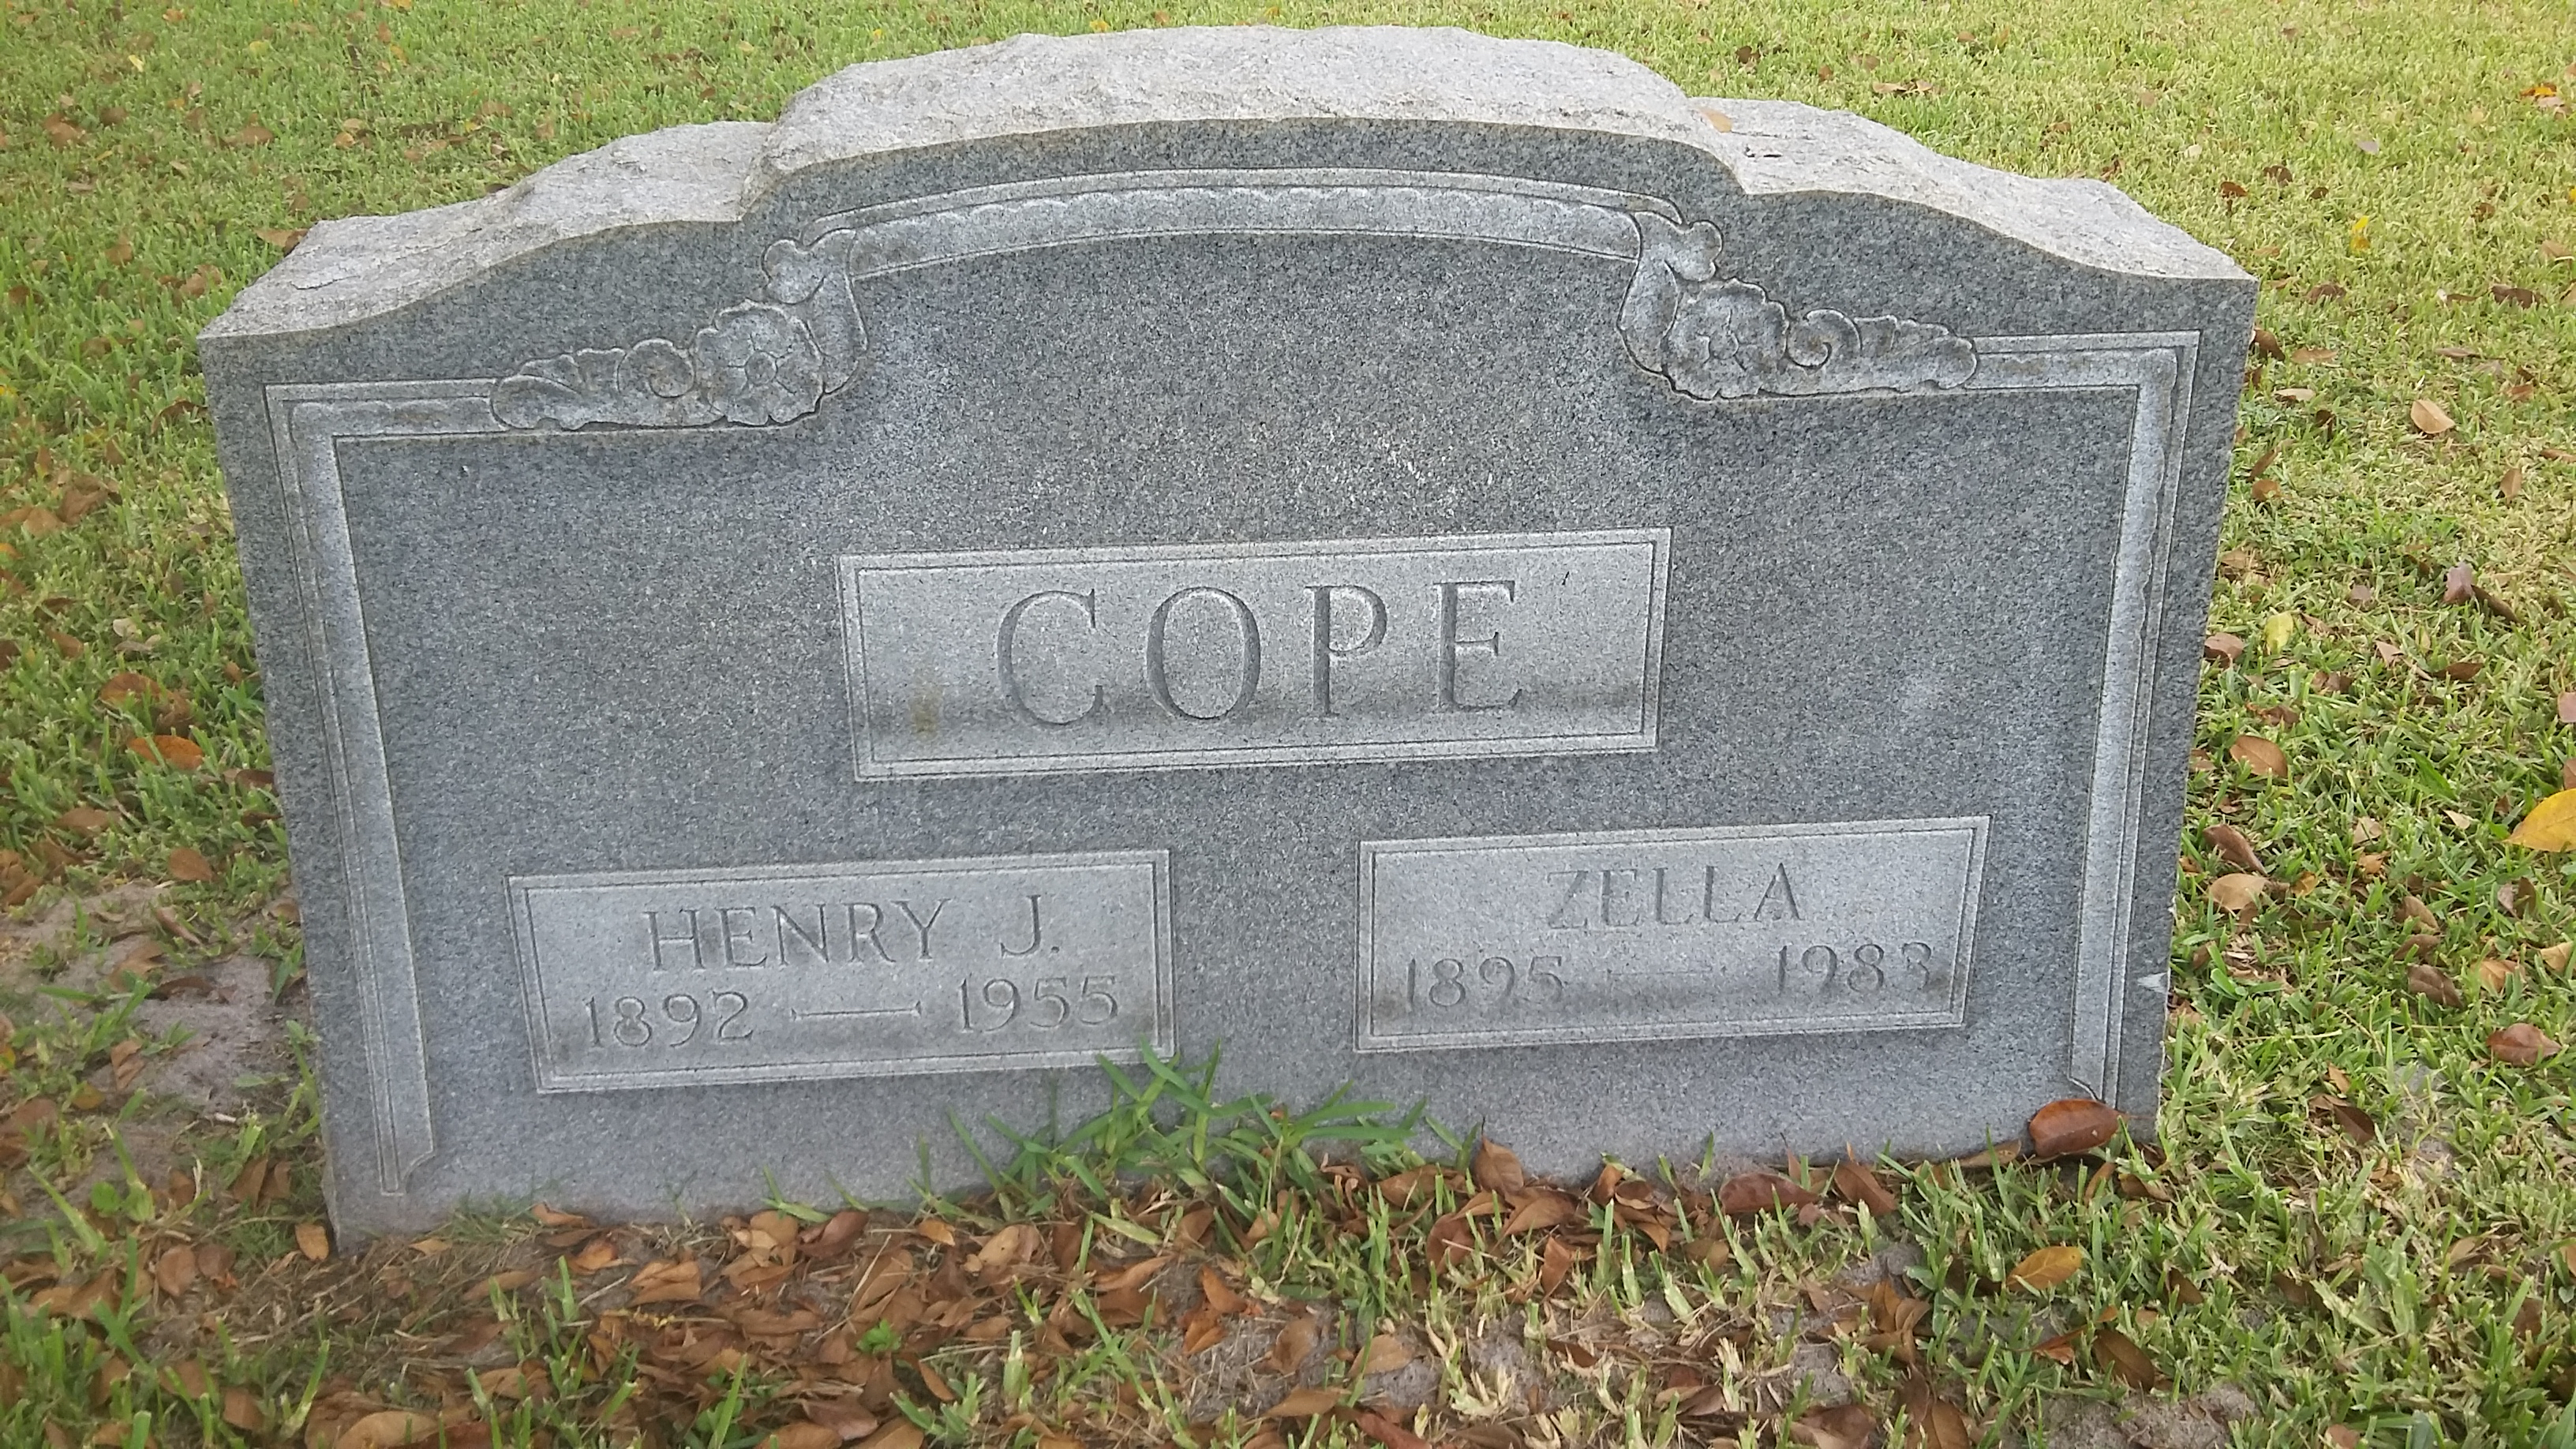 Henry J Cope